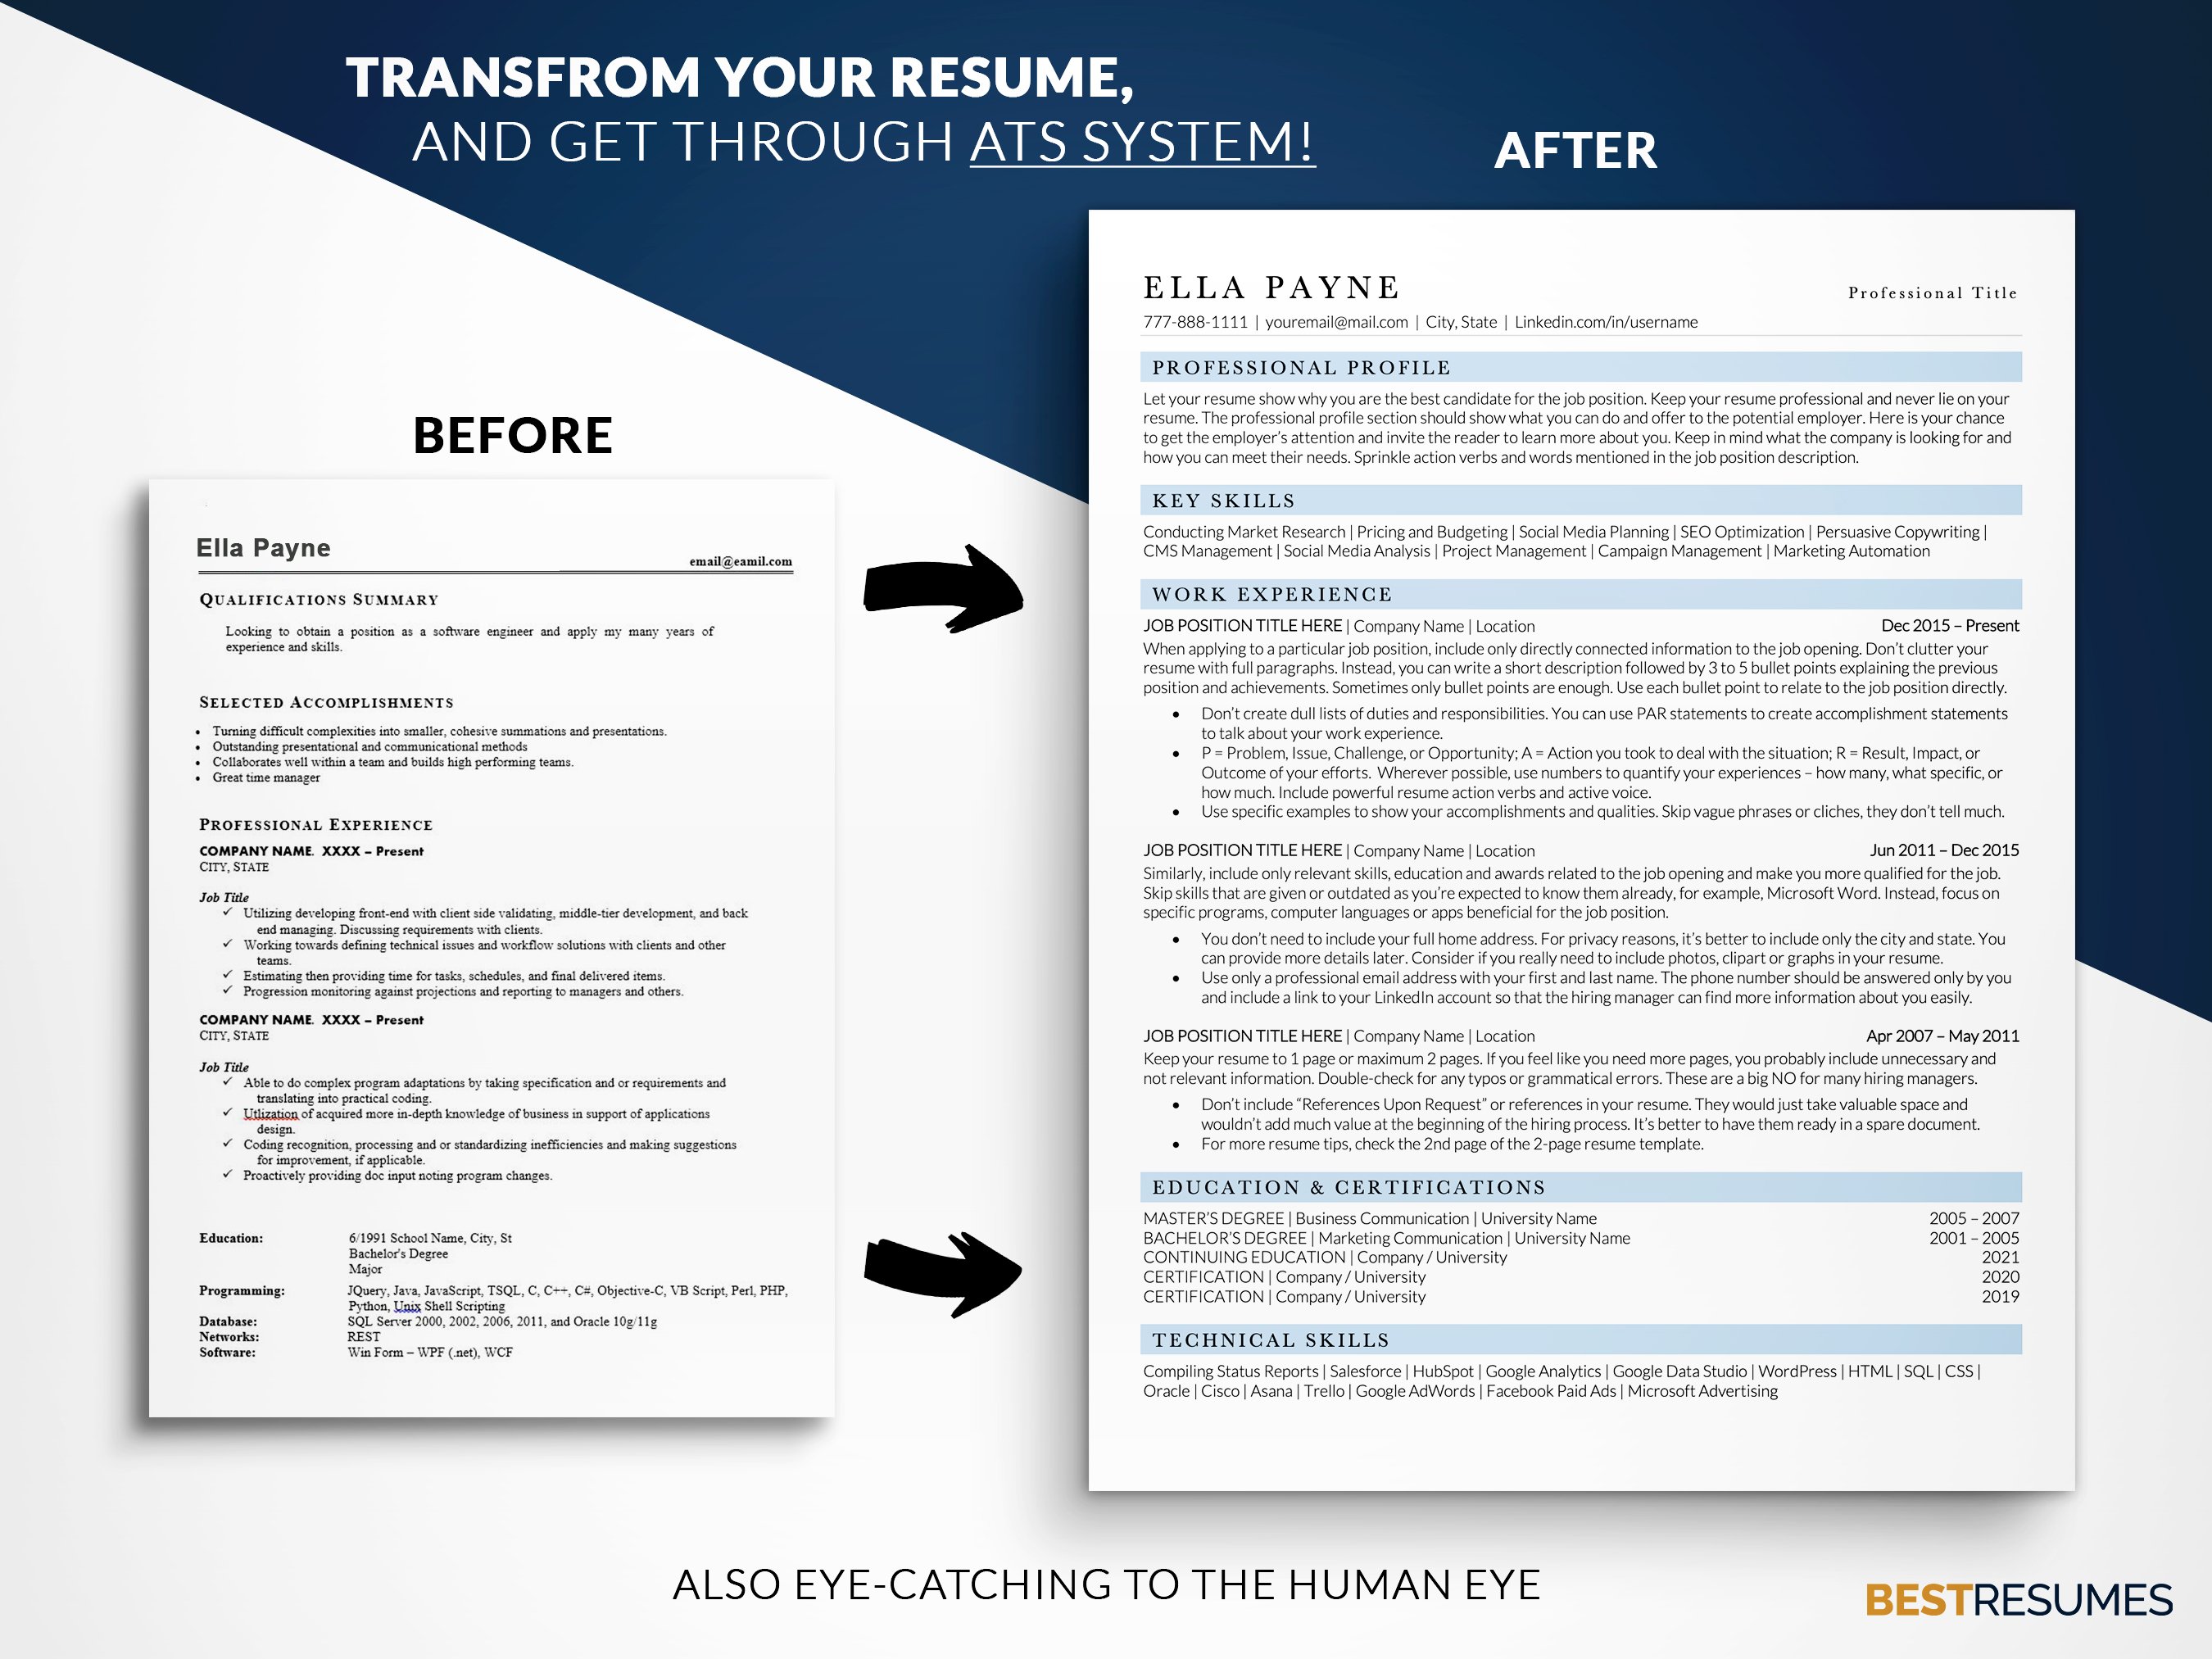 ats optimized resume template resume transformation ella payne 218